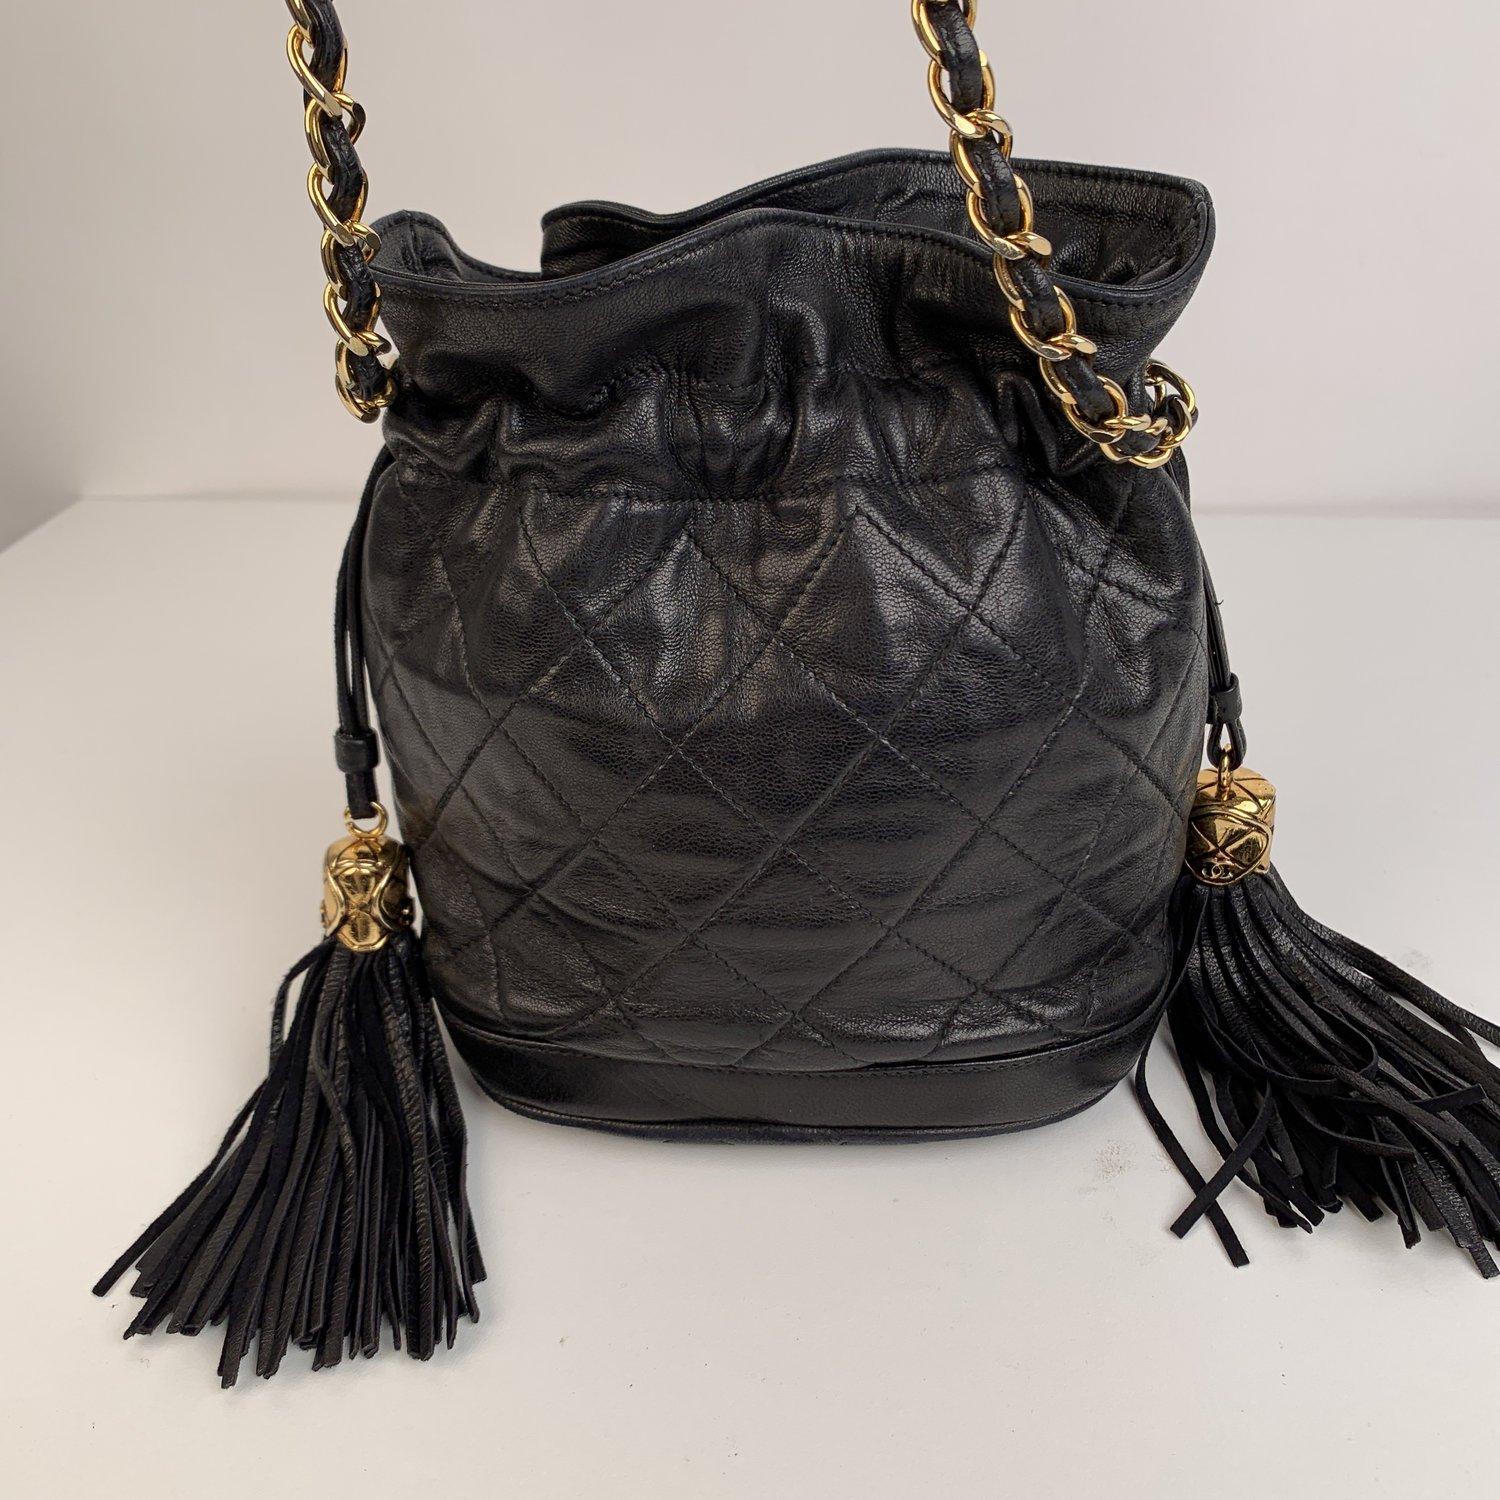 Chanel Vintage 1989 Black Quilted Leather Small Bucket Shoulder Bag 4